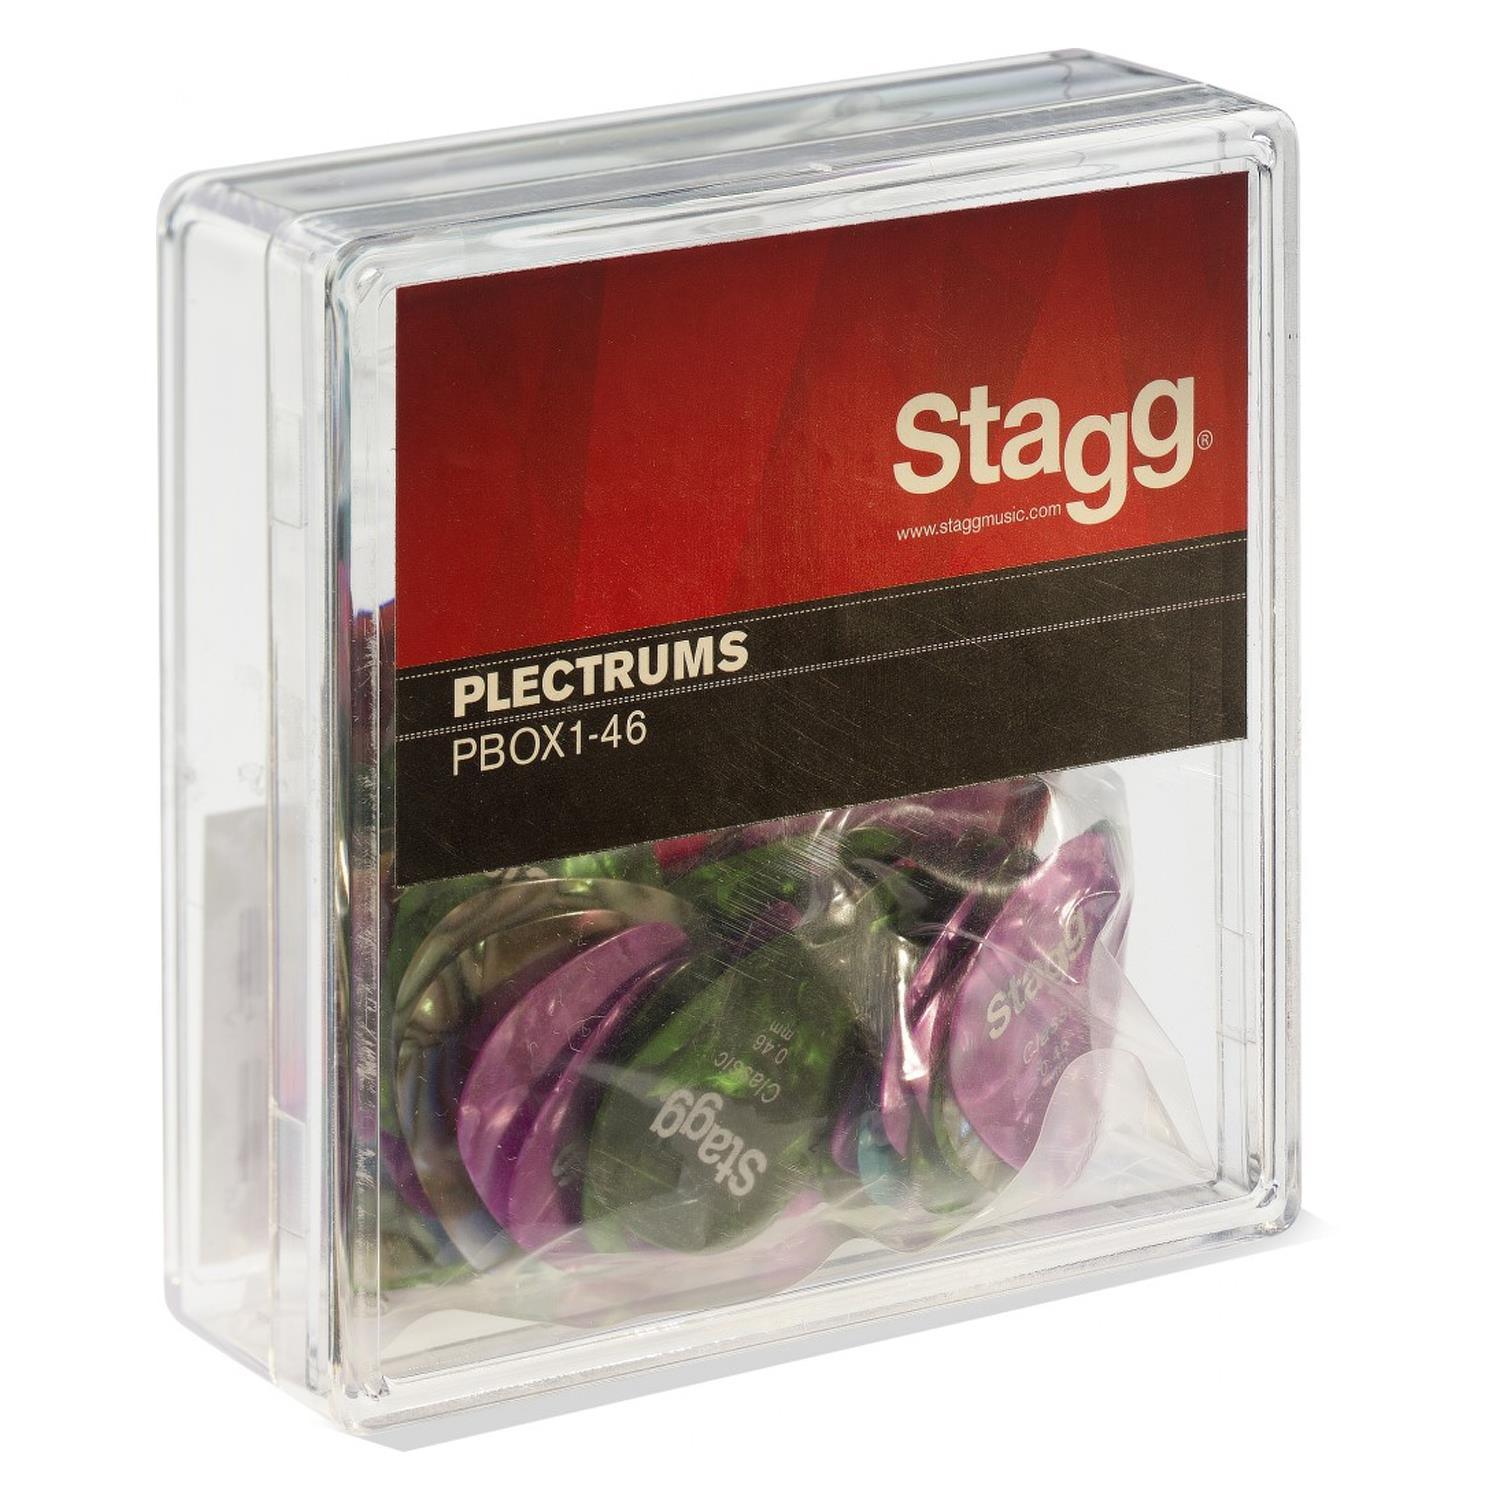 100 x Stagg Plastic Plectrums Picks 0.46mm Multicoloured - DY Pro Audio